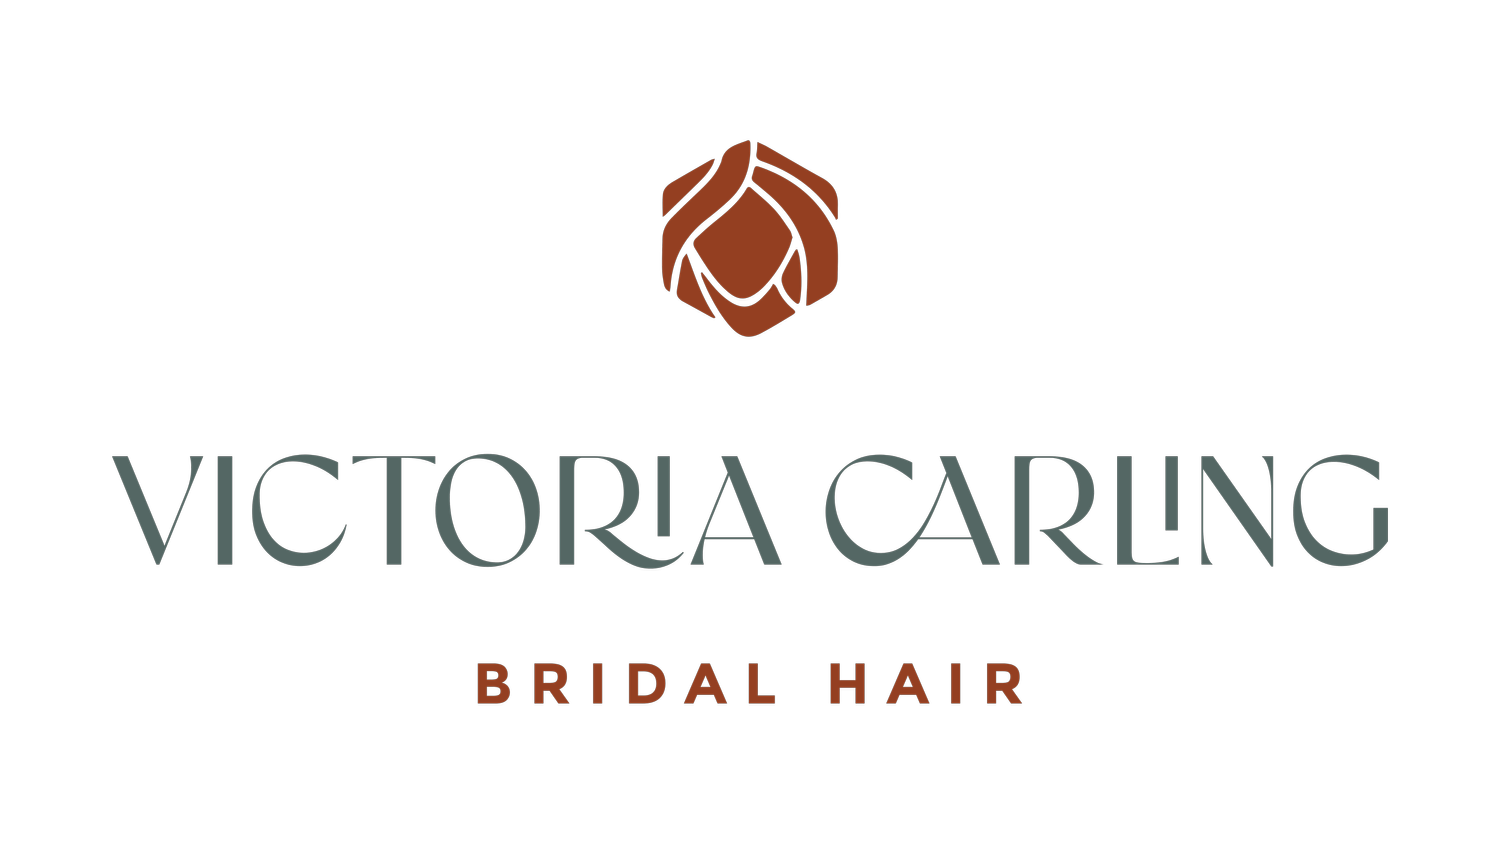 Victoria Carling Bridal Hair